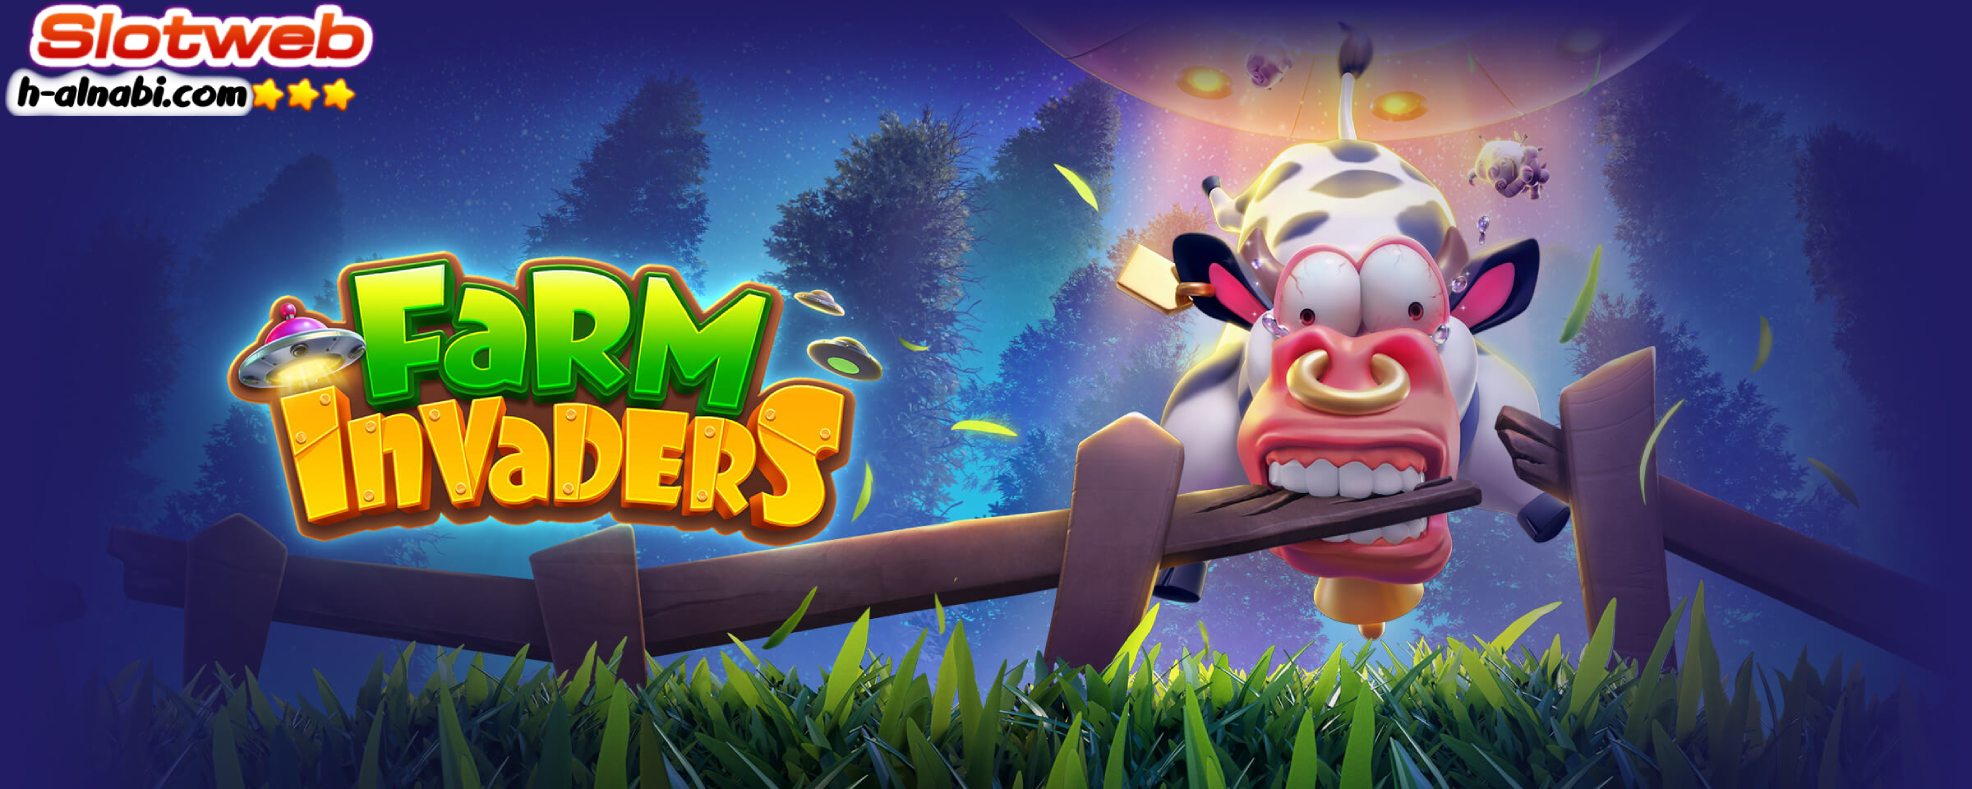 Farm Invader Game-h-alnabi